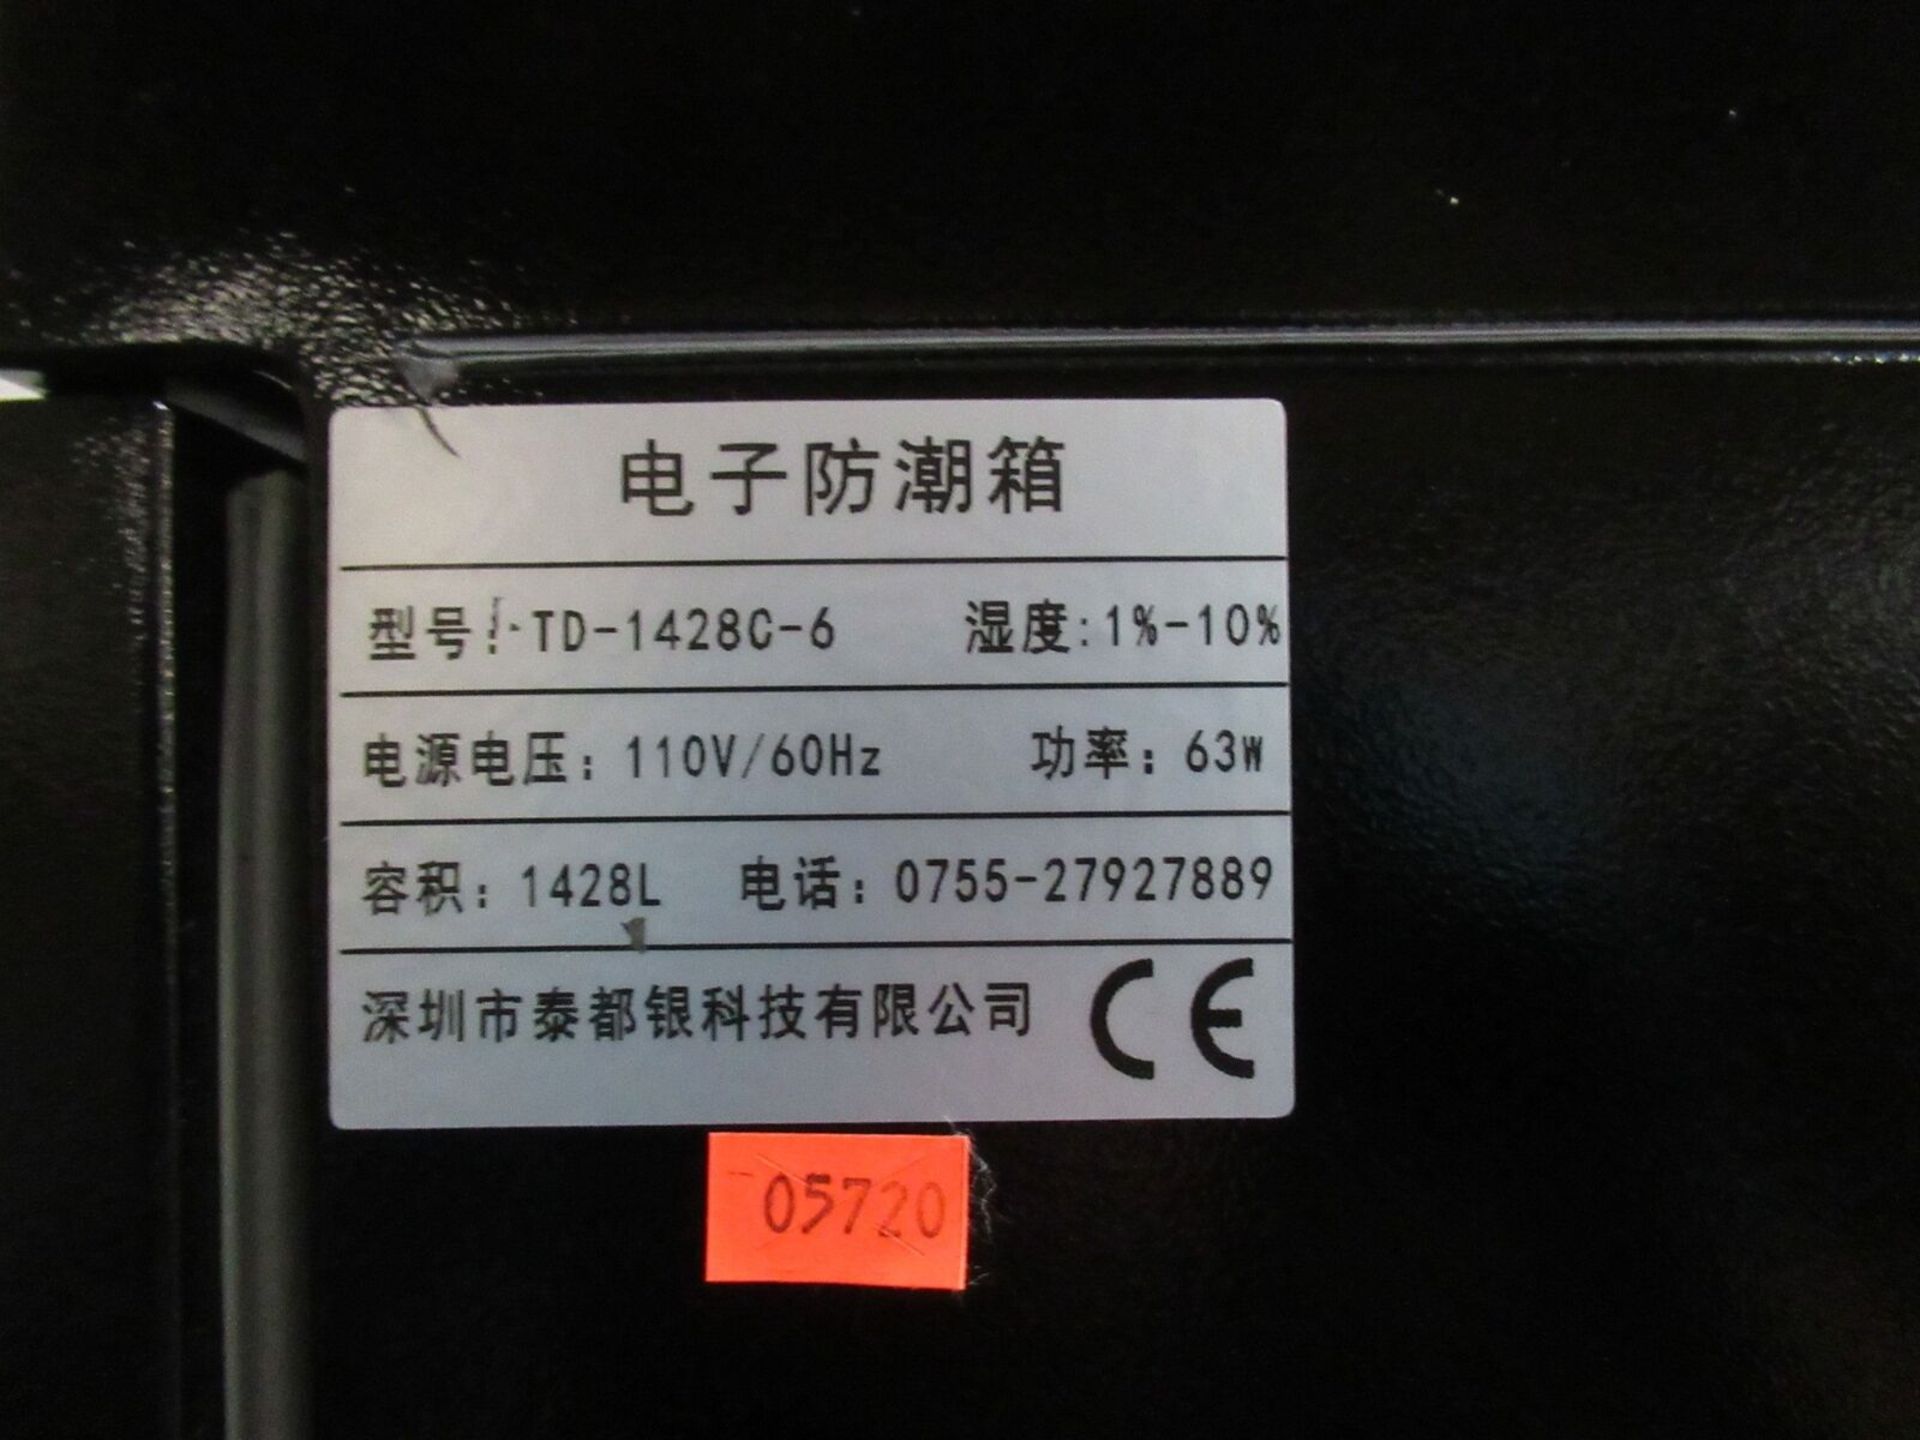 Shenzhen Taiduyin TD-1428C-6 Low Humidity Storage Cabinet 1-10% RH - Image 6 of 7